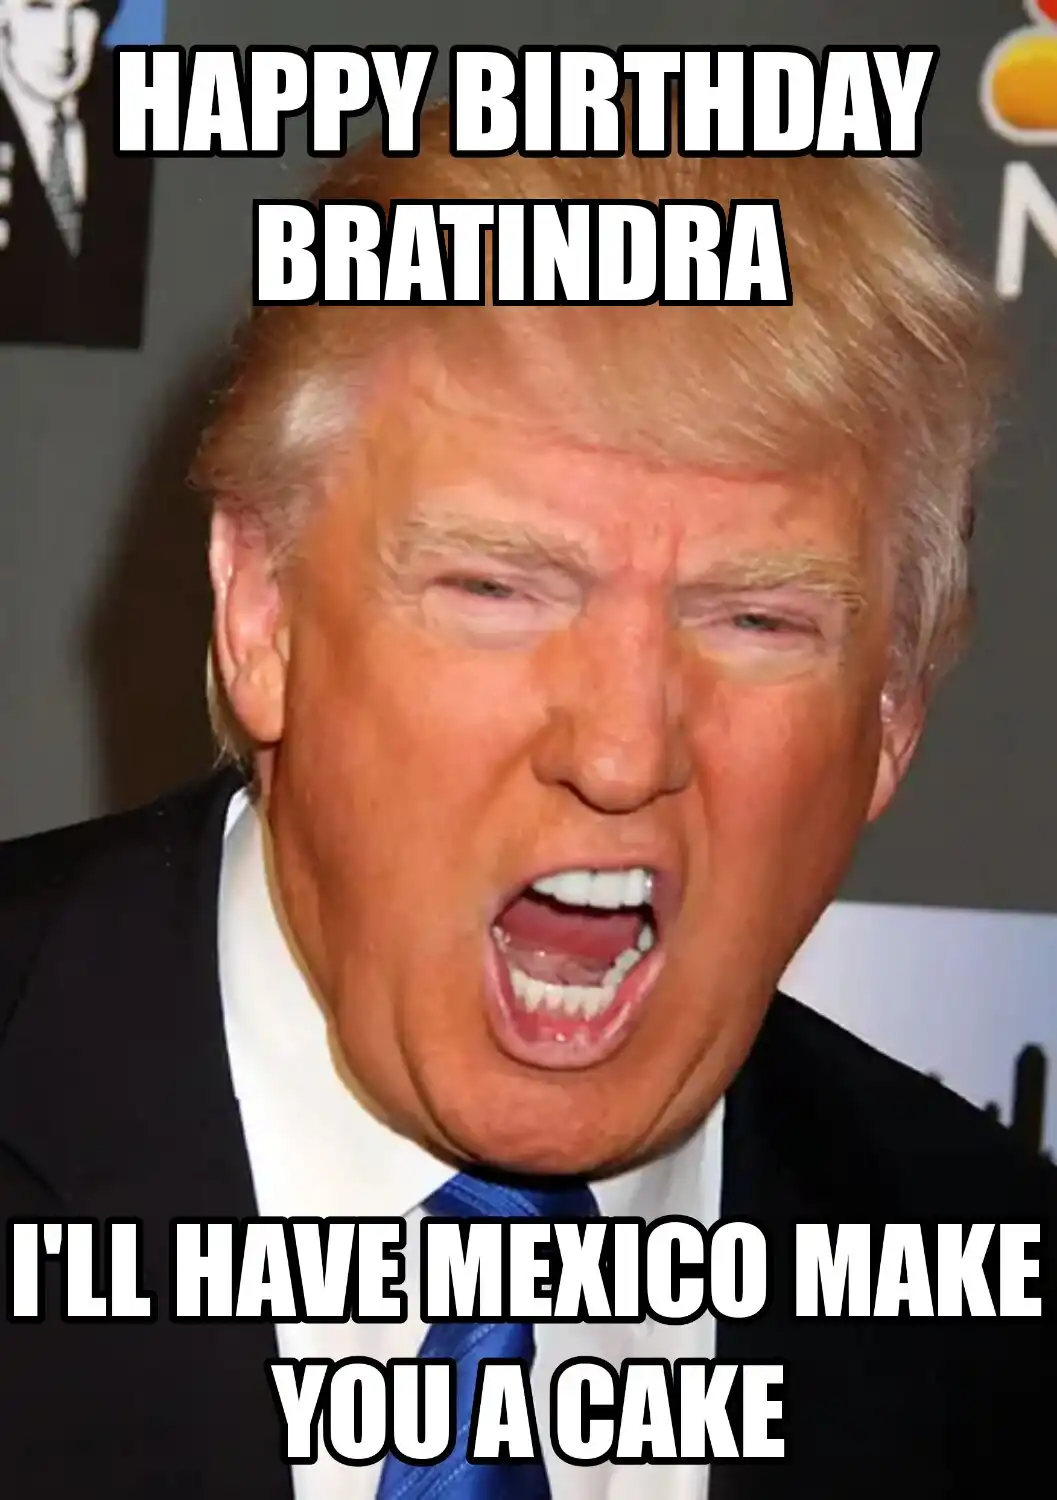 Happy Birthday Bratindra Mexico Make You A Cake Meme